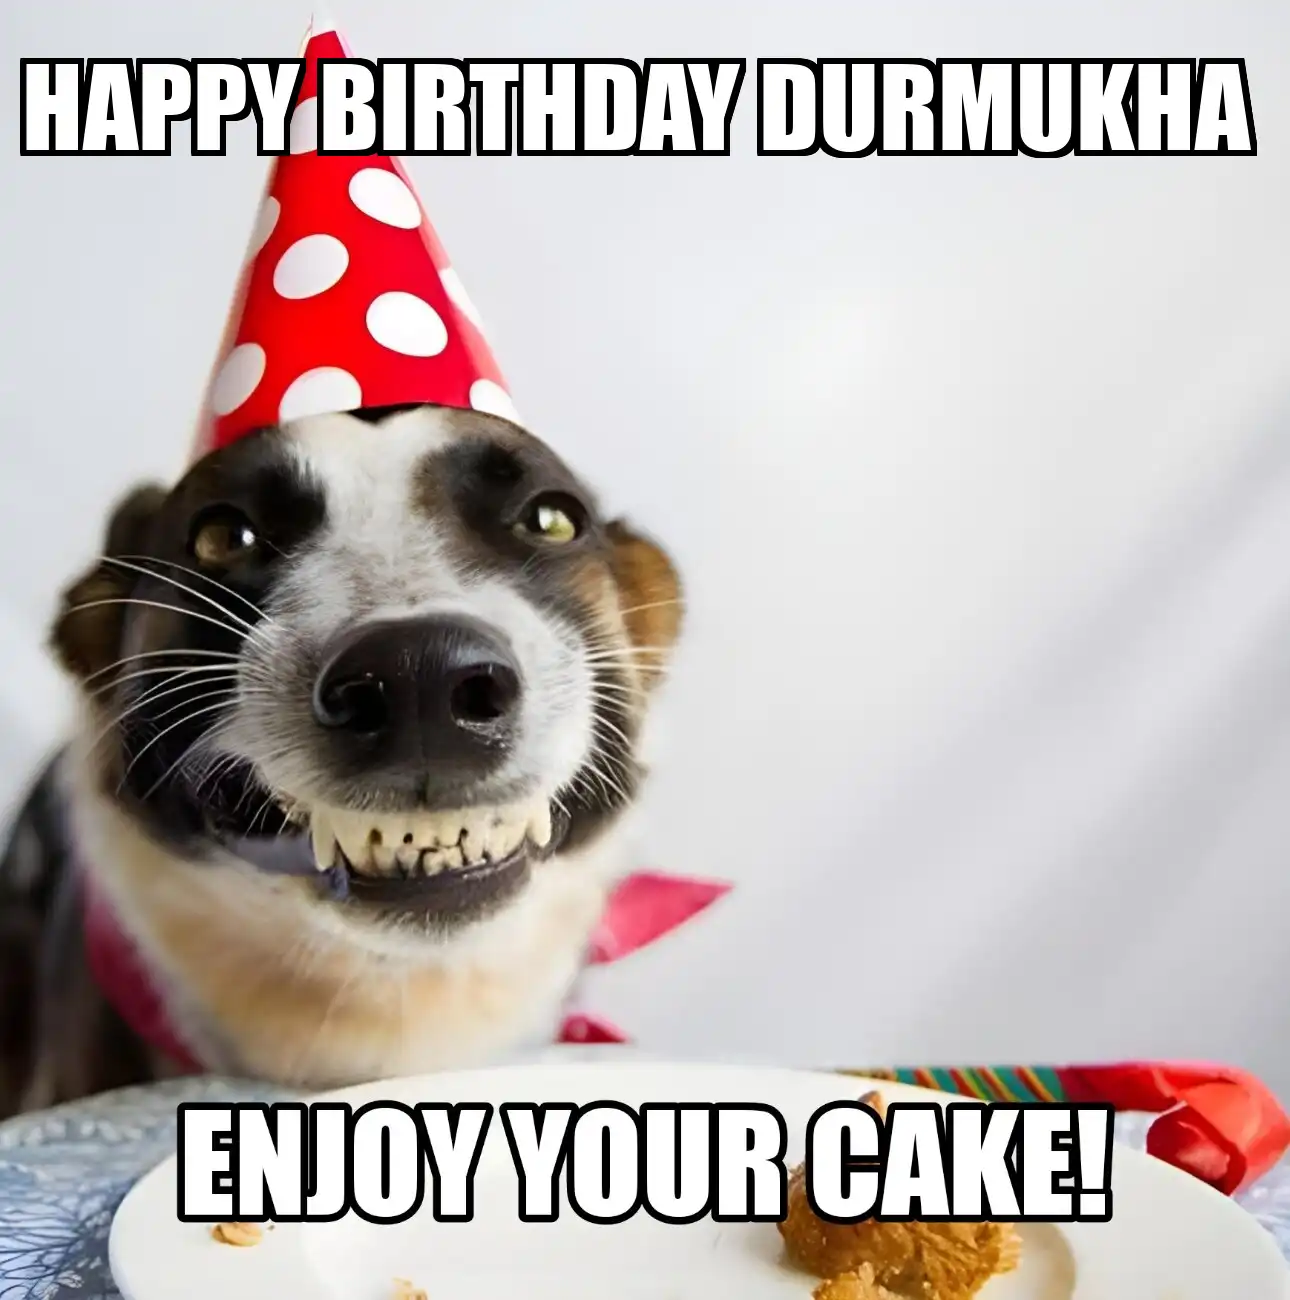 Happy Birthday Durmukha Enjoy Your Cake Dog Meme